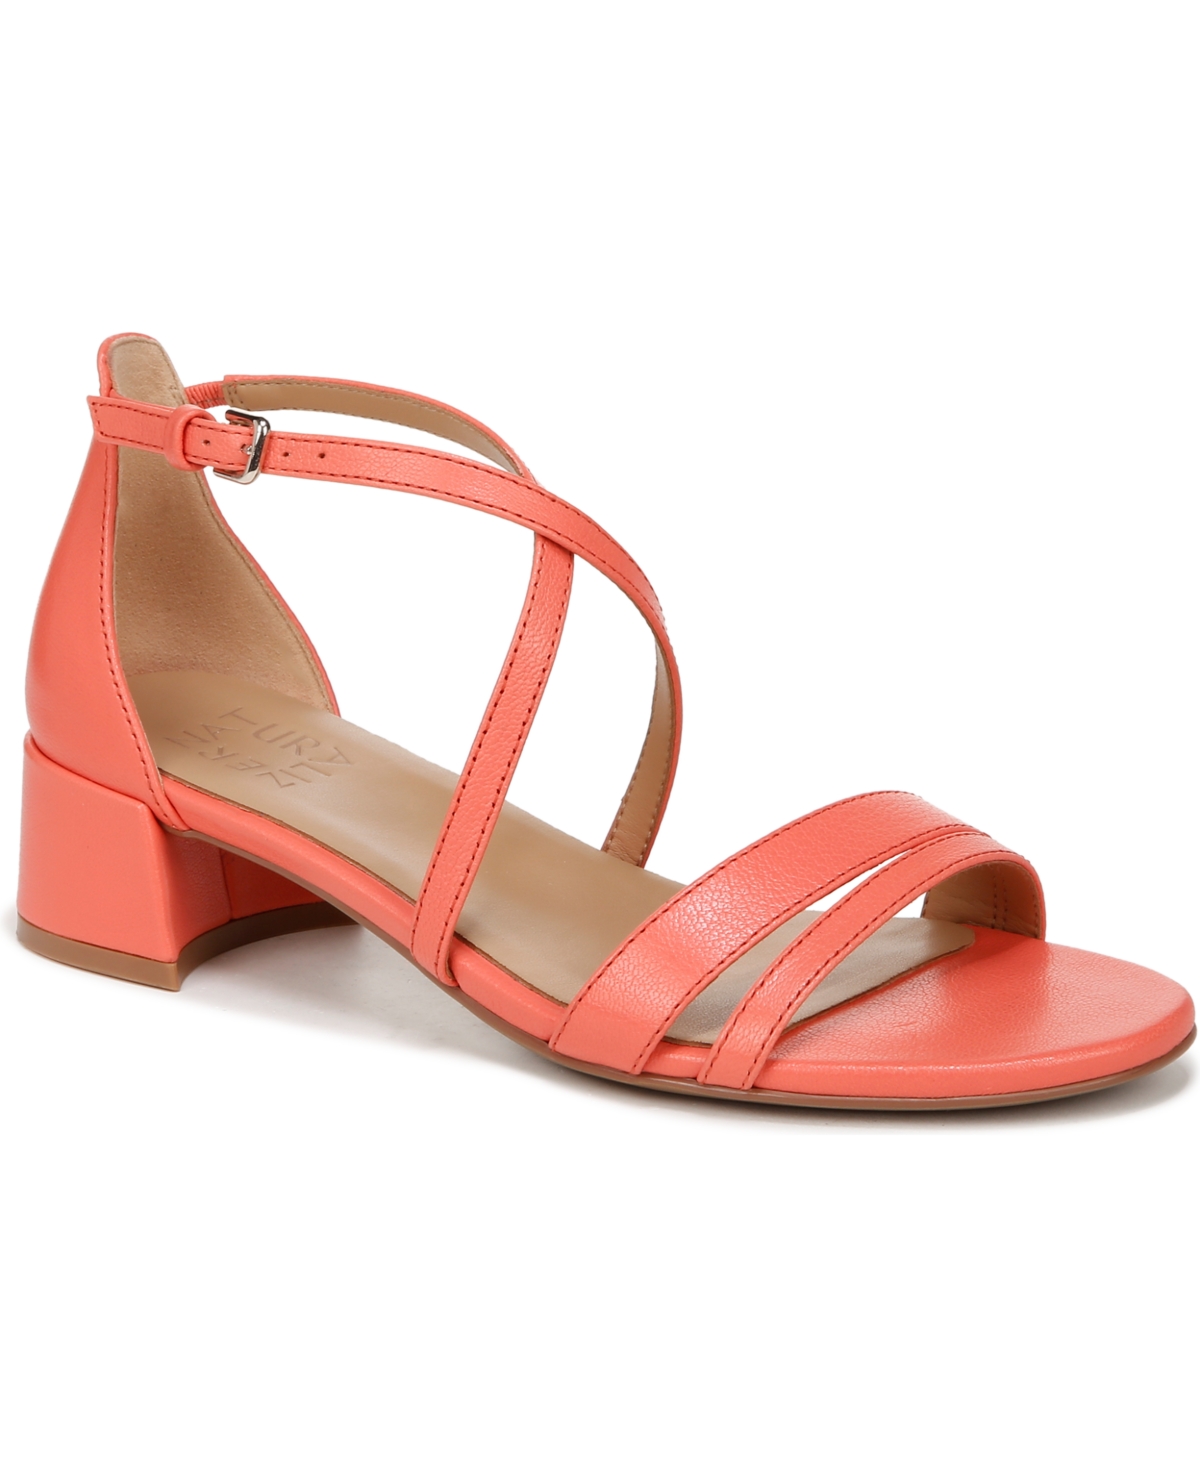 June Mid-Heel Dress Sandals - Apricot Blush Leather